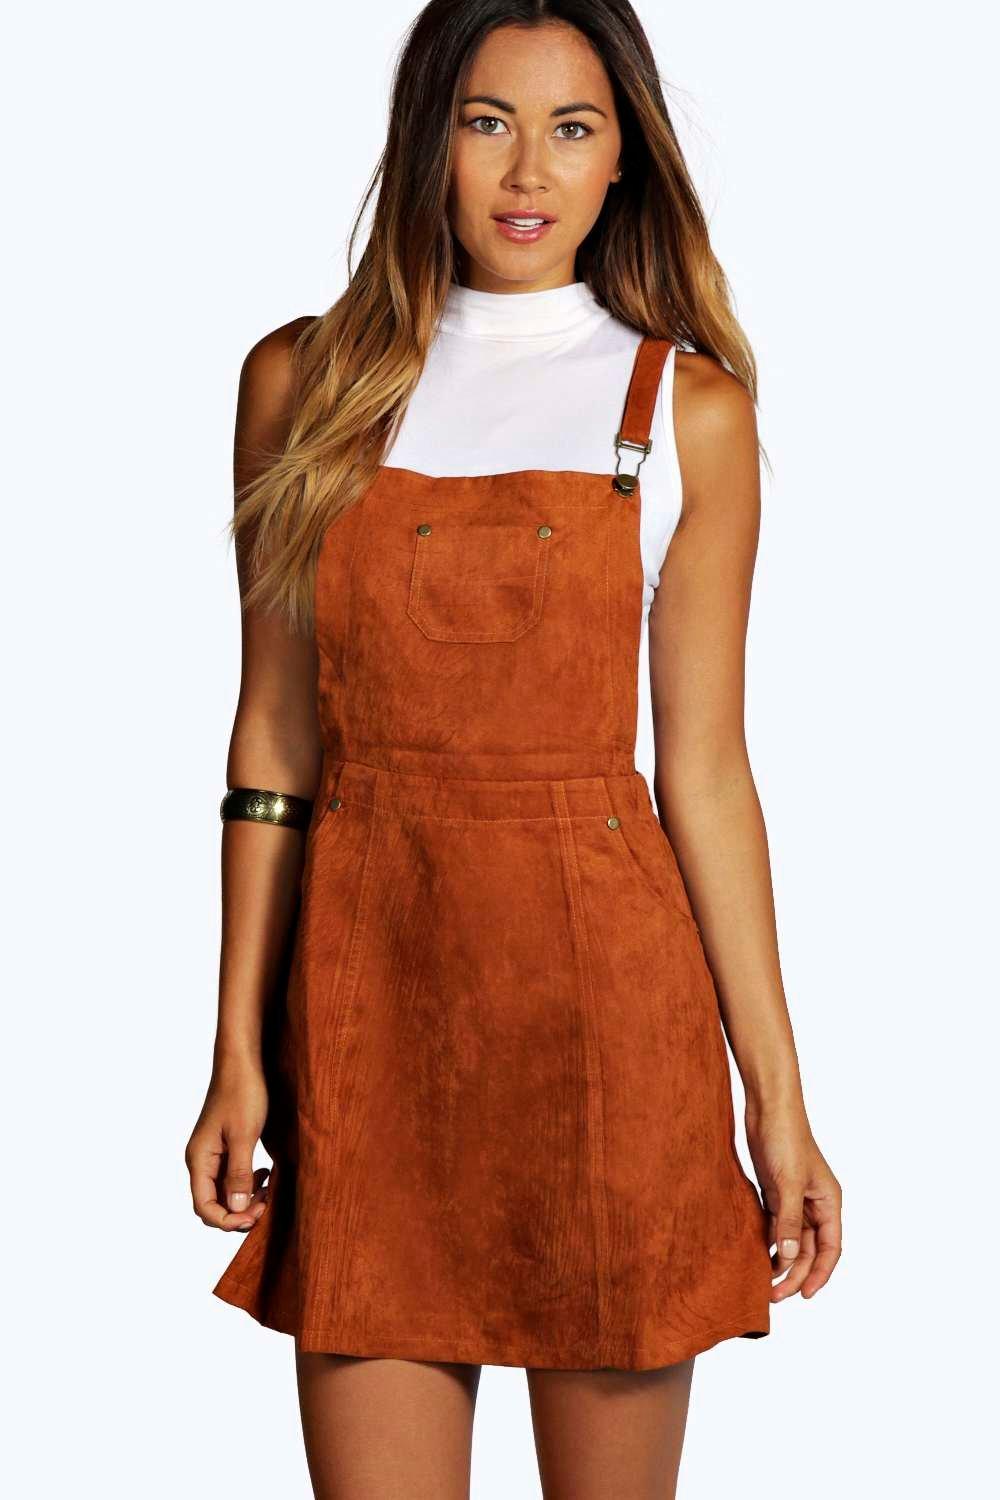 rust pinafore dress